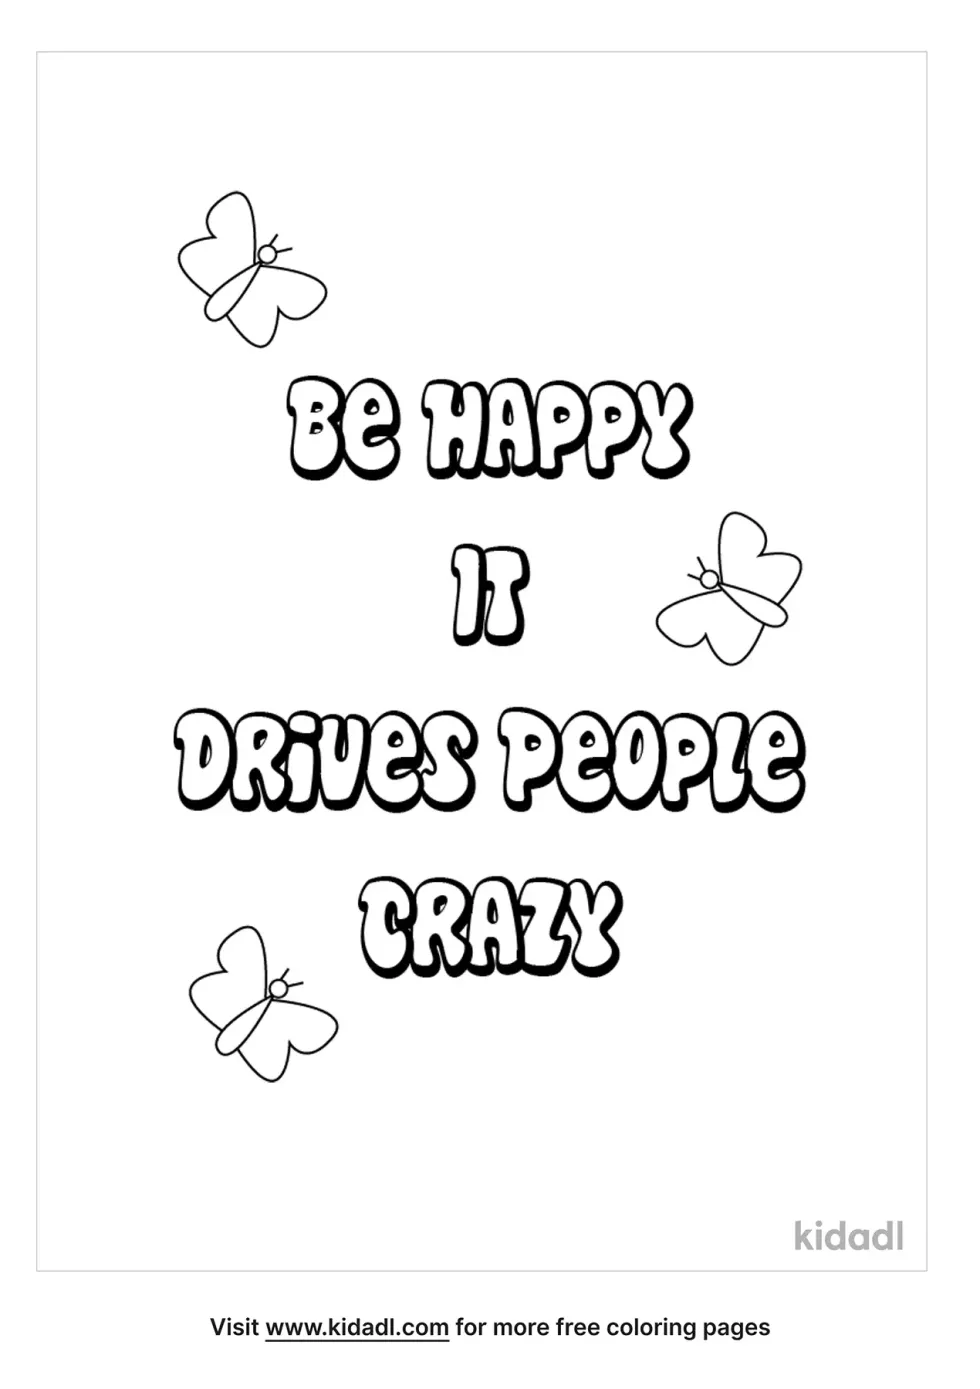 Be Happy It Drives